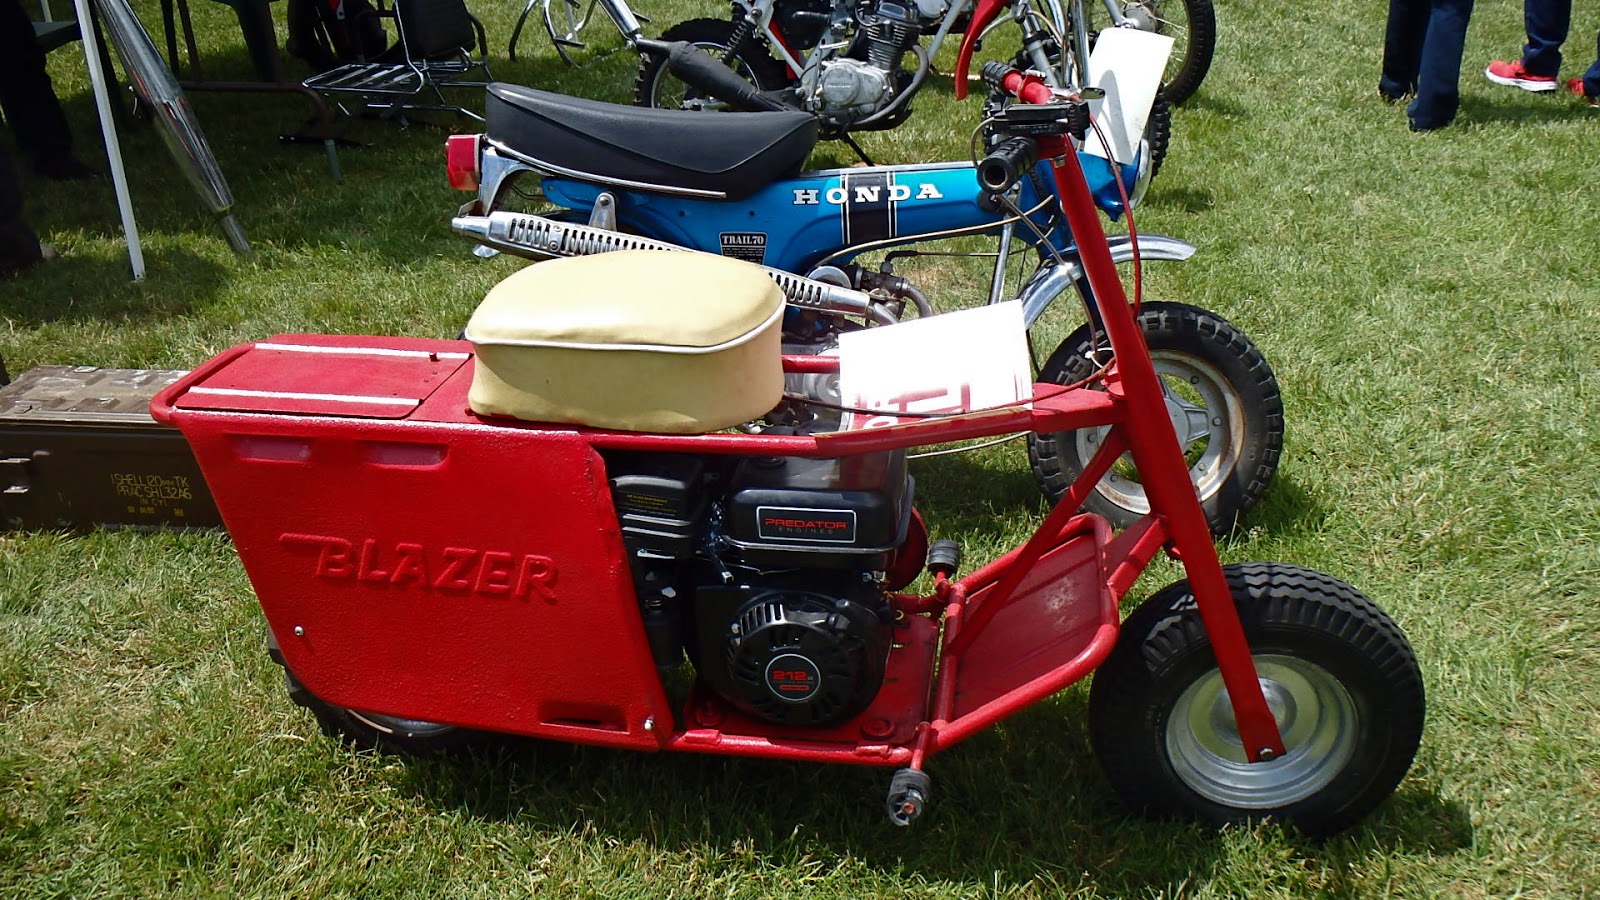 Trobairitz' Tablet: 2013 Oregon Vintage Motorcycle Show